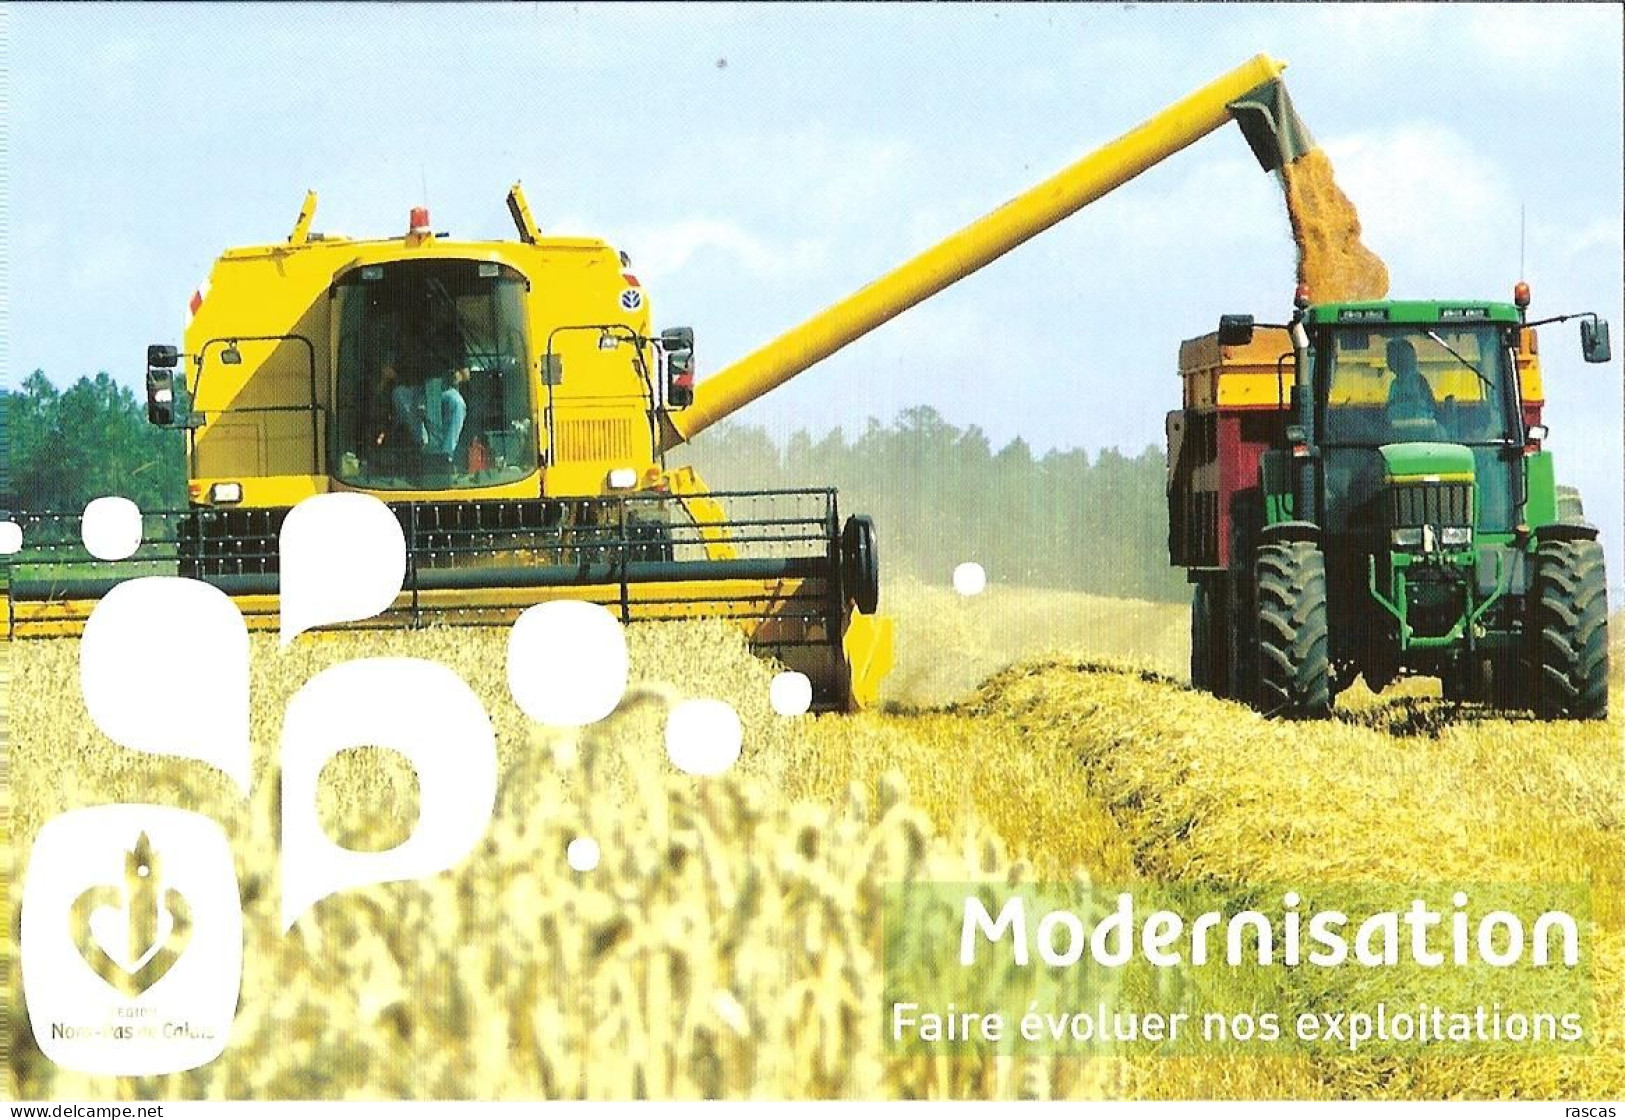 CPM - NORD - PAS DE CALAIS - TERRE D'INNOVATION AGRICOLE - MODERNISATION - FAIRE EVOLUER NOS EXPLOITATIONS - Nord-Pas-de-Calais